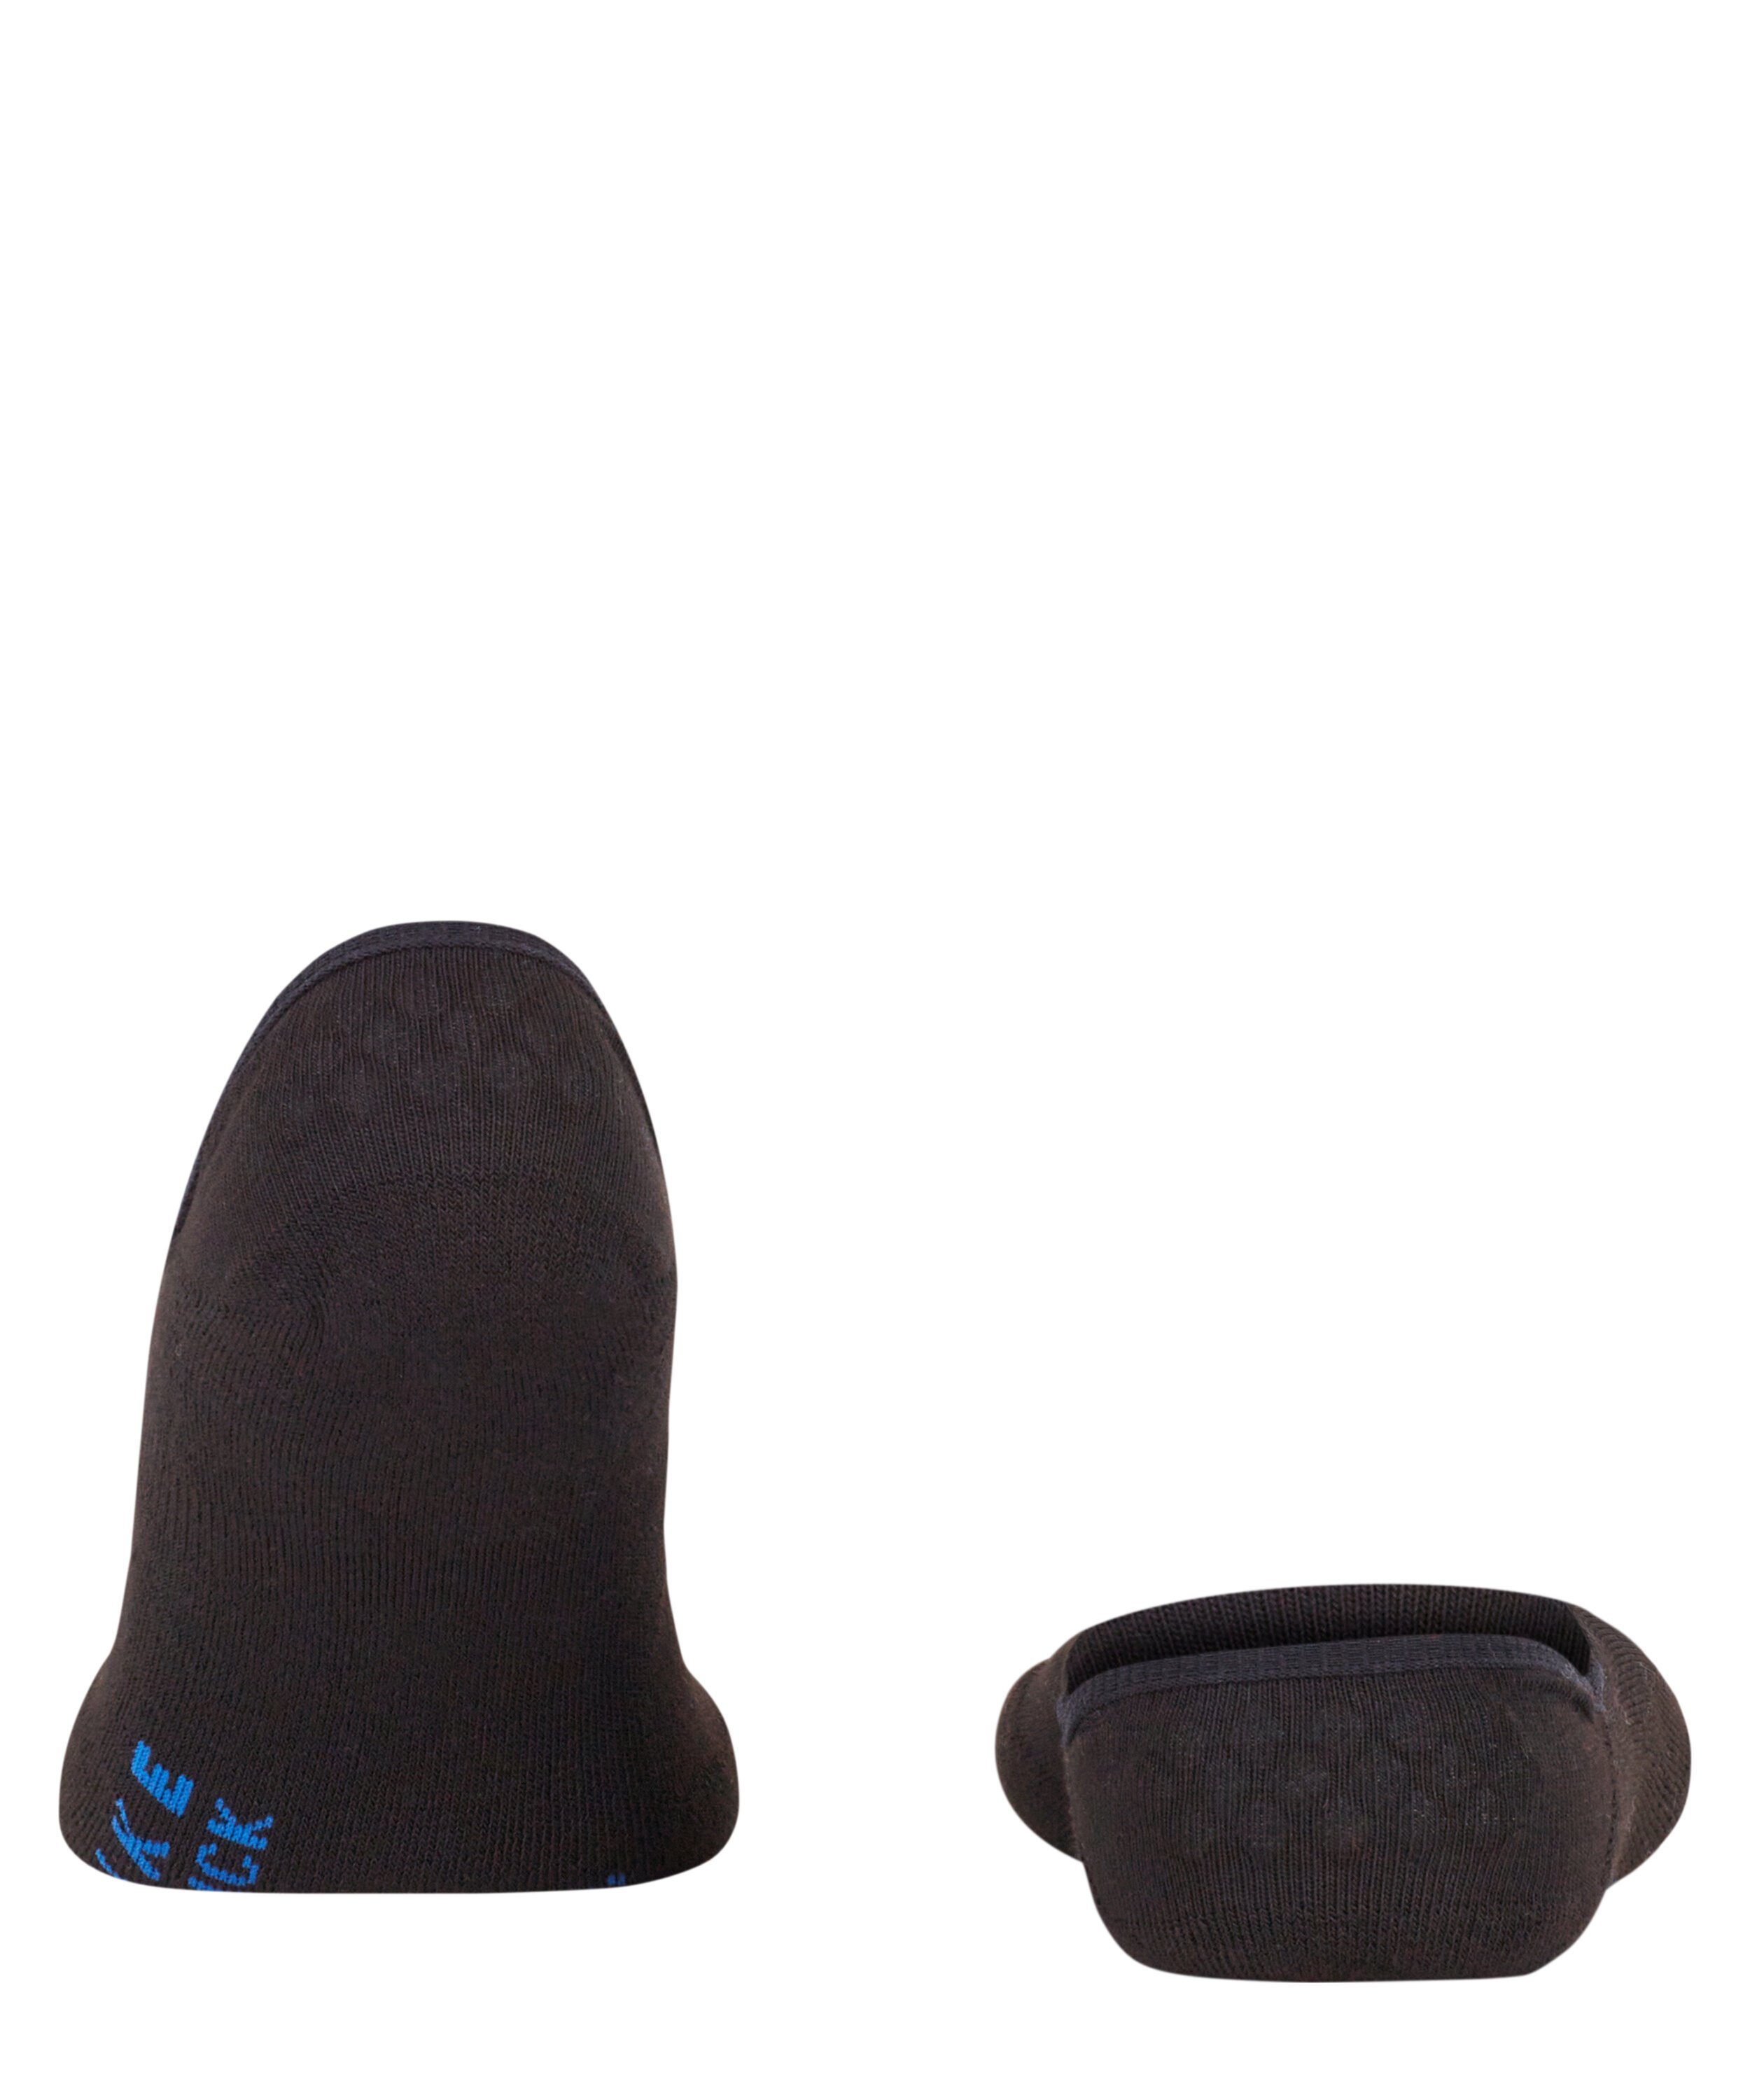 Wäsche/Bademode Socken FALKE Füßlinge Cool Kick (1-Paar) mit ultraleichter Plüschsohle